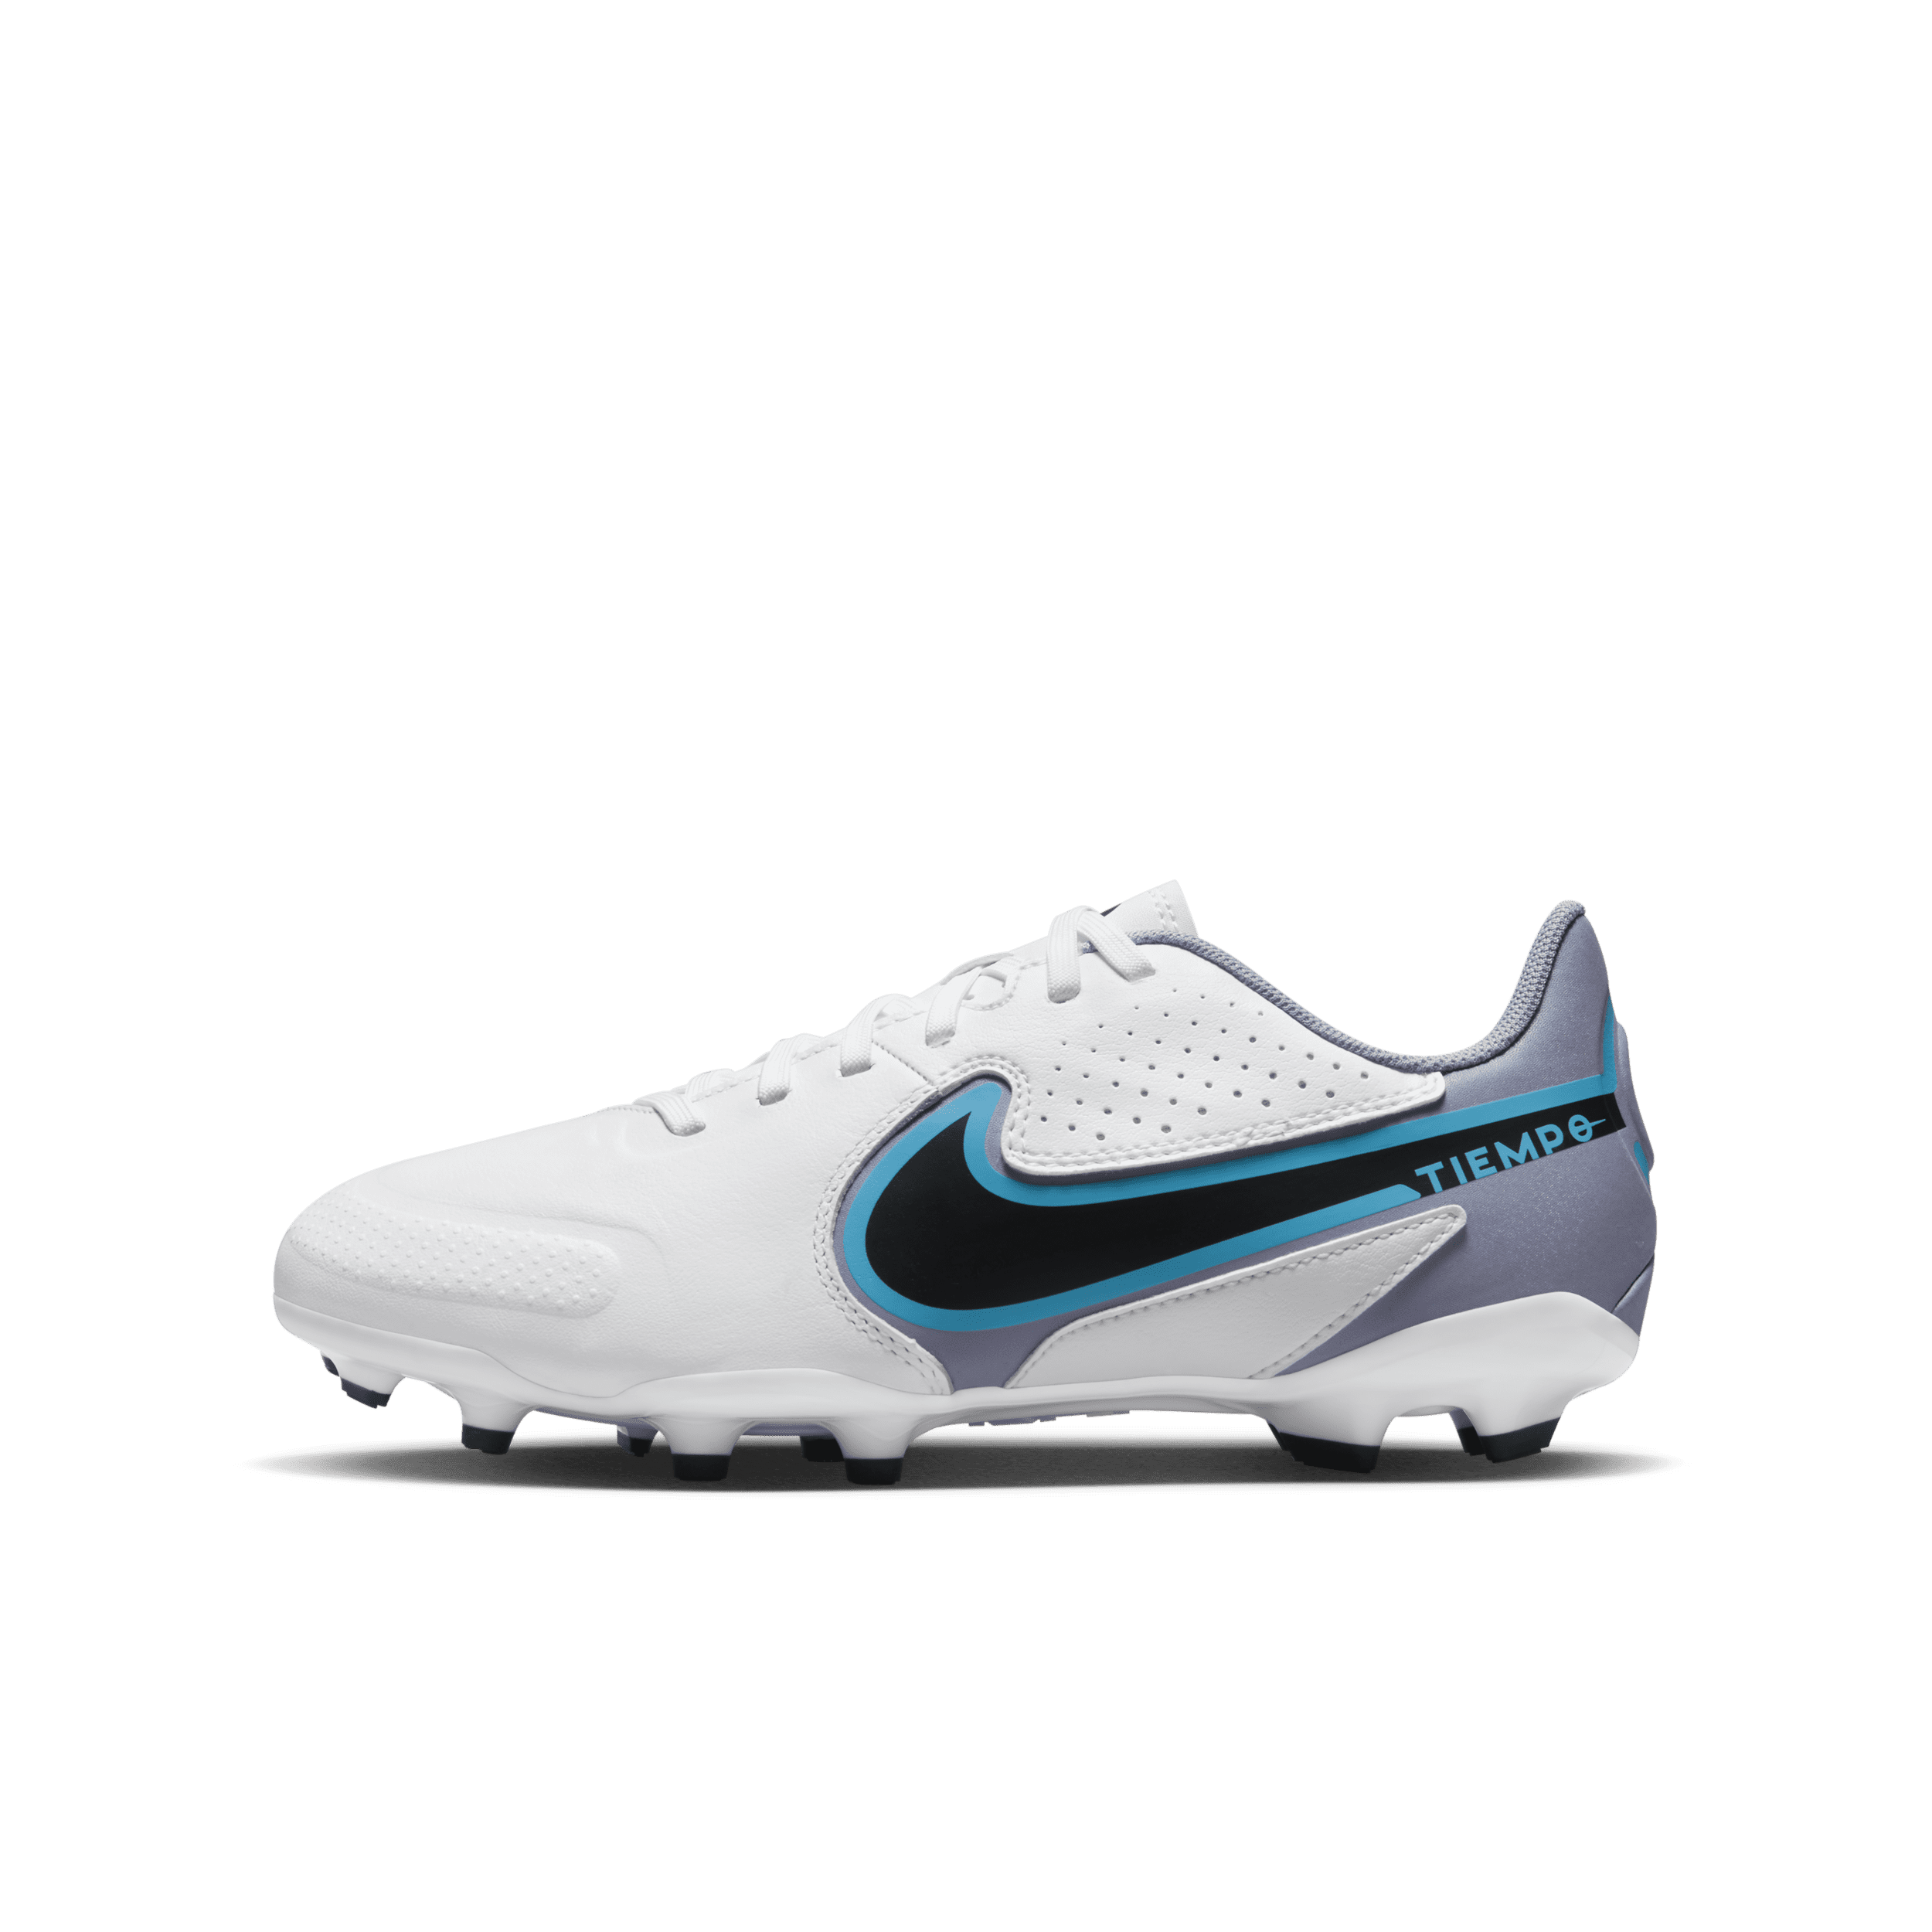 obvio Profeta Tía Nike Tiempo Legend Academy Junior FG Football Boots | DA1333-146 | FOOTY.COM